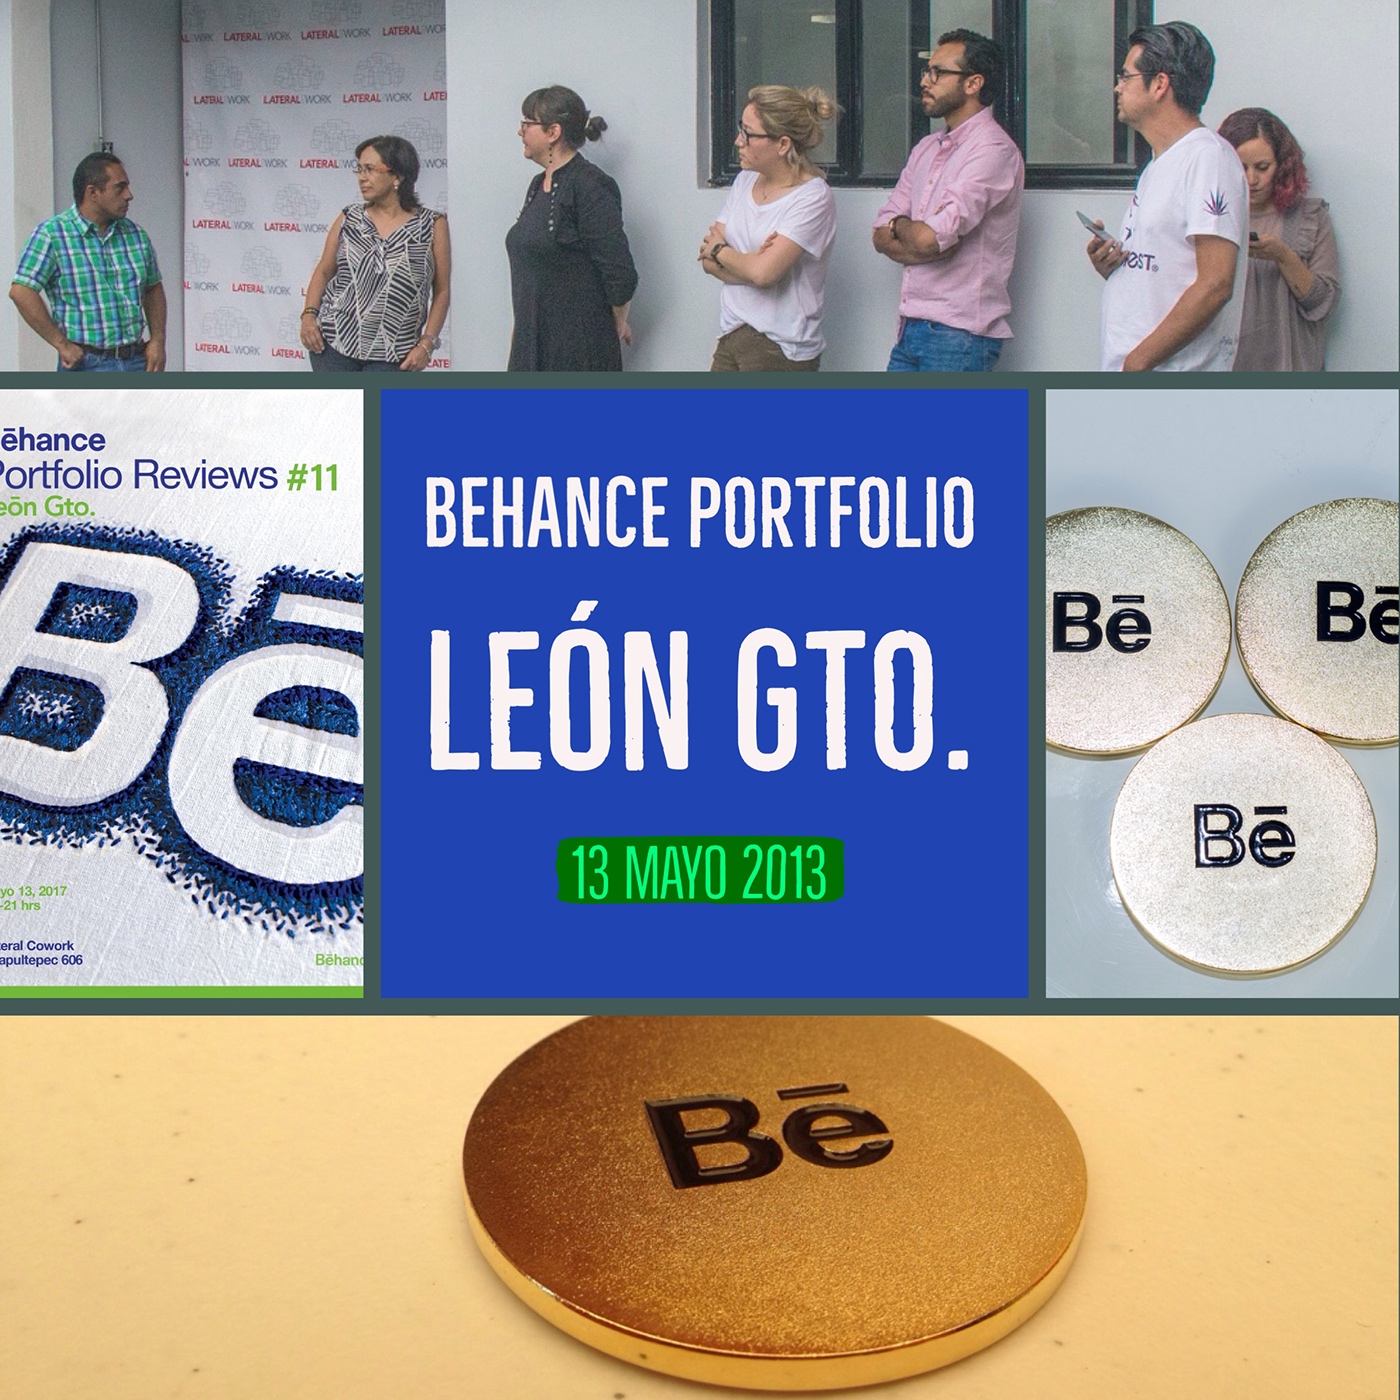 León Gto\ Behance portfolio reviews